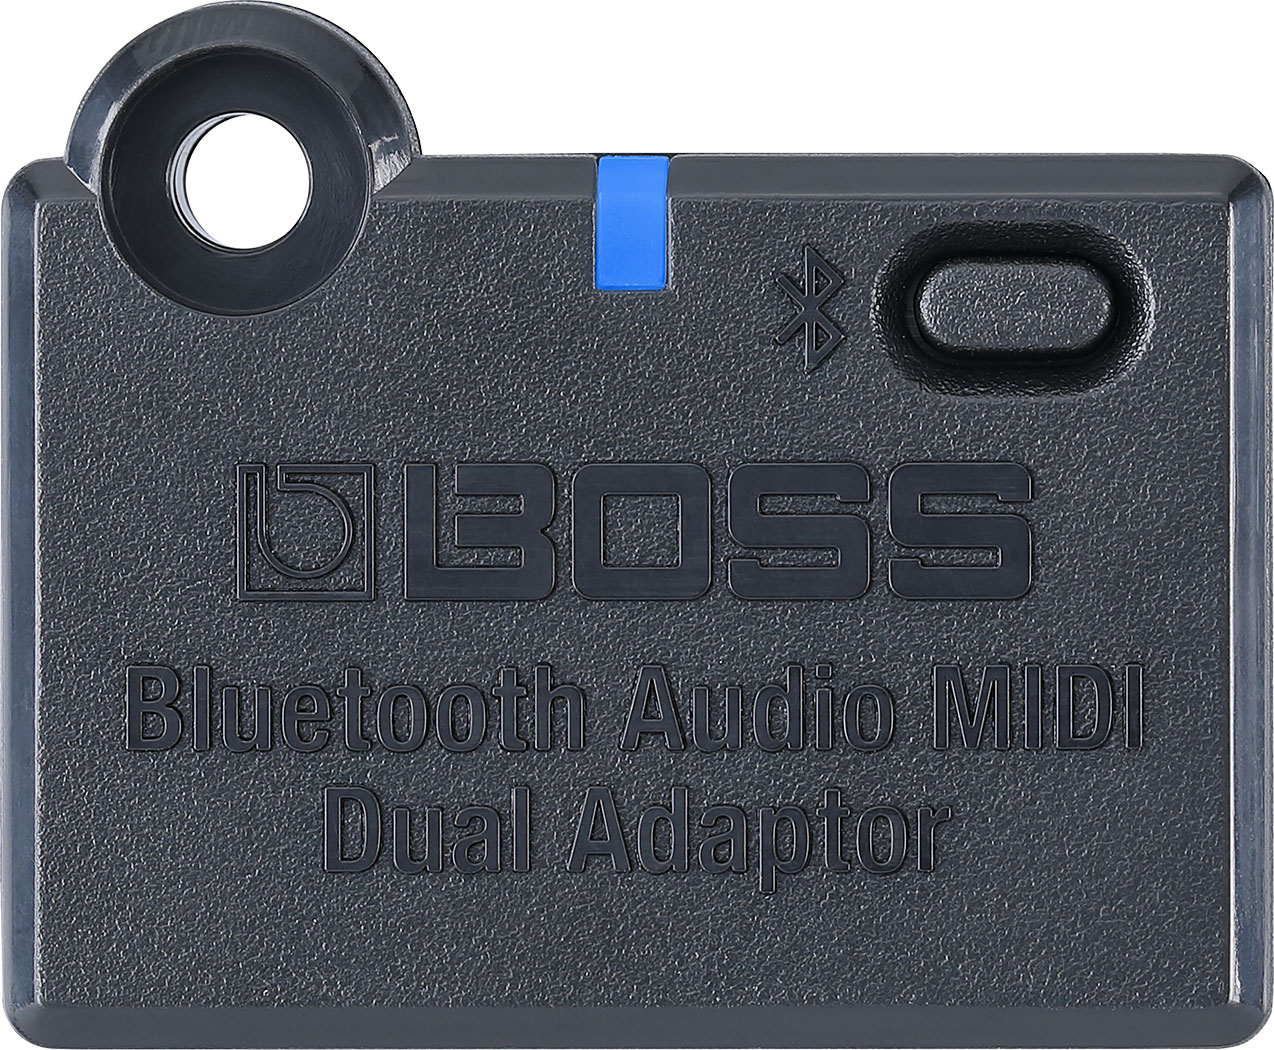 Bluetooth Audio MIDI Dual Adaptor